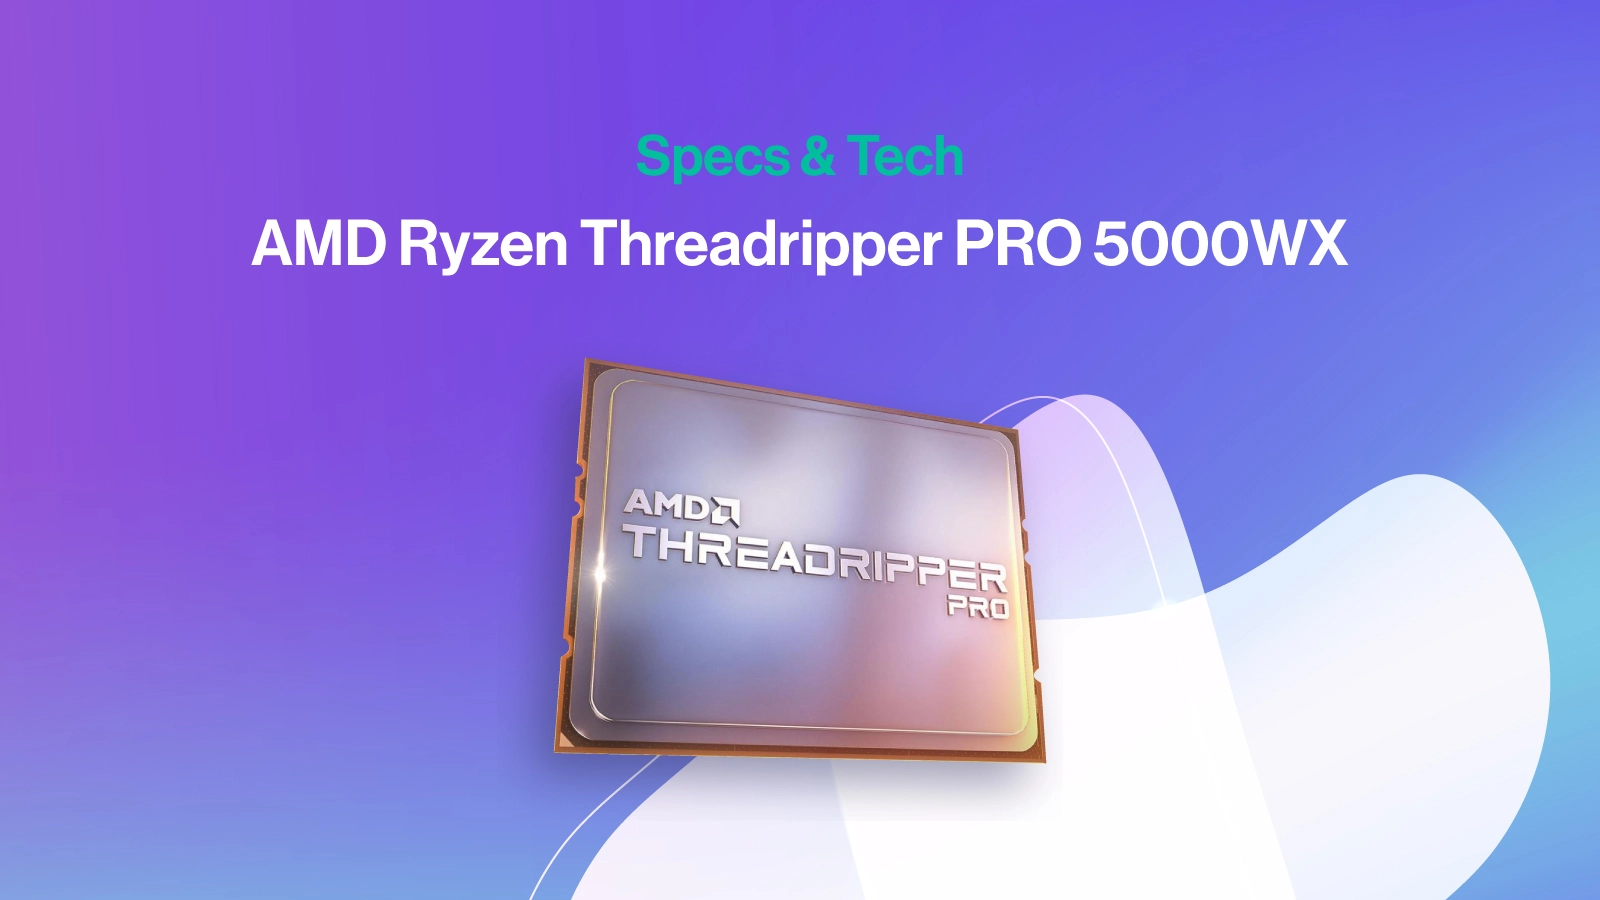 SPC-Blog-AMD-TR-5000wx.jpg